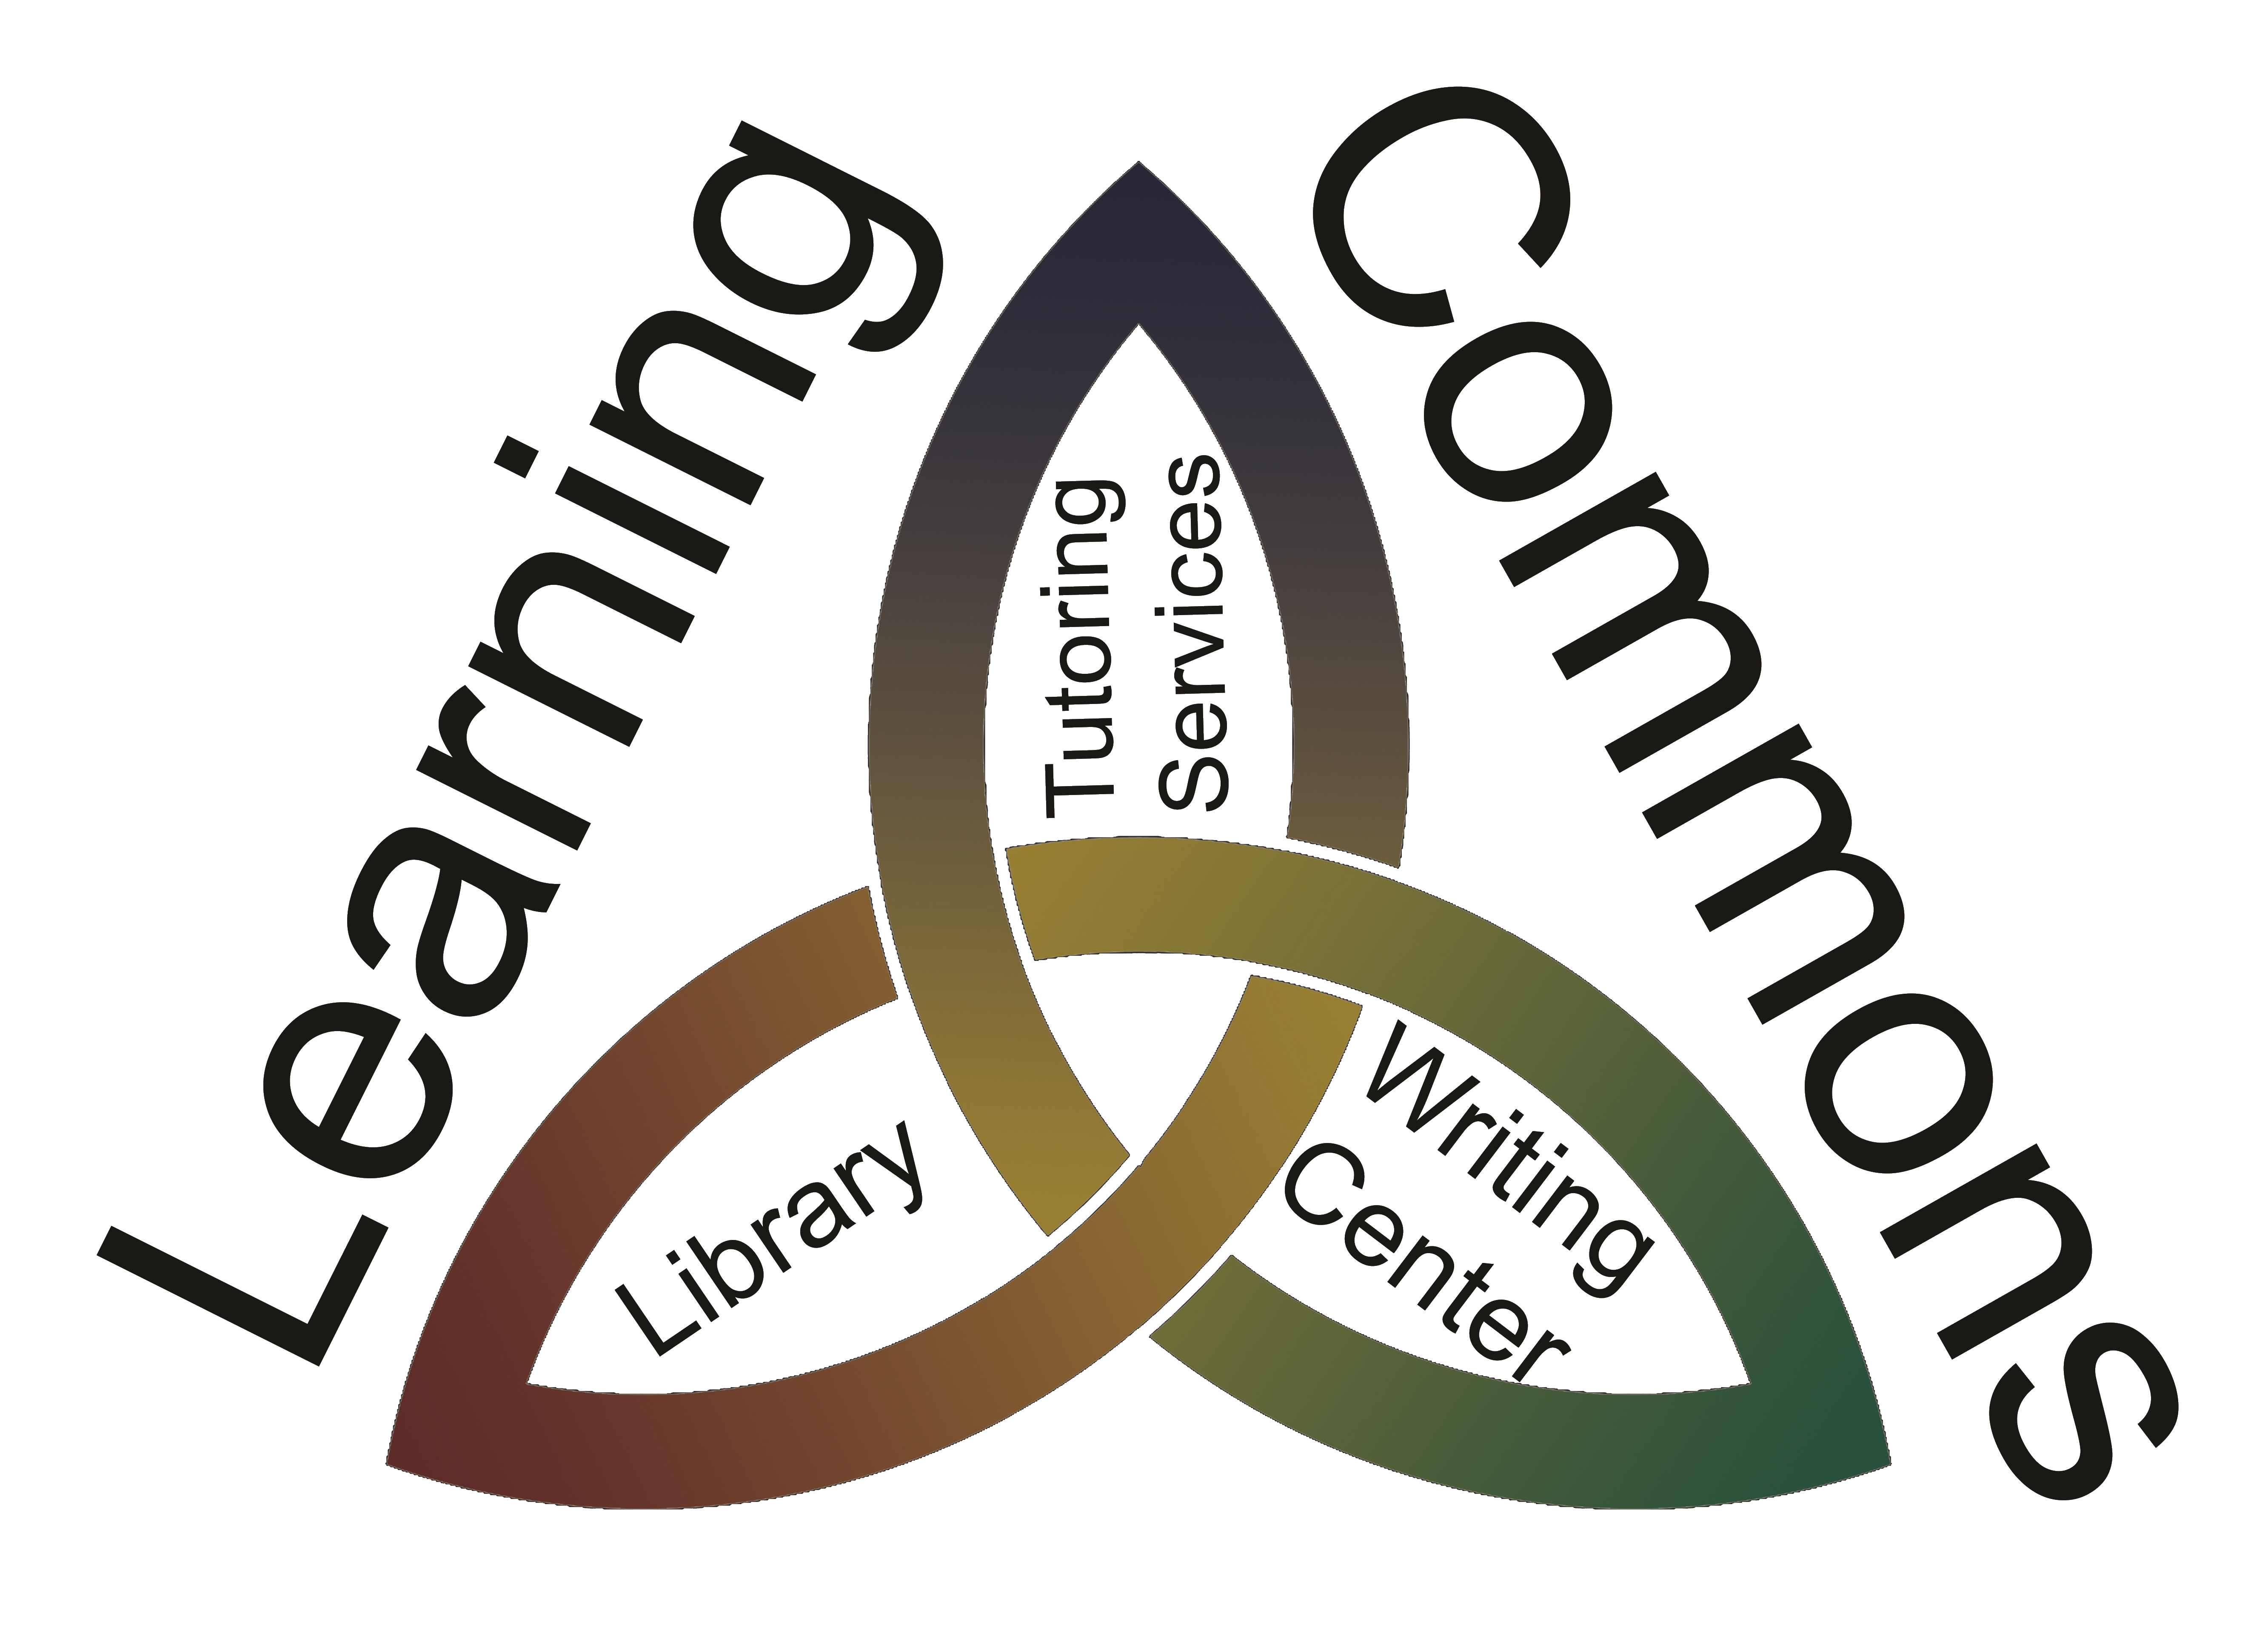 Learning Commons logo trinity knot